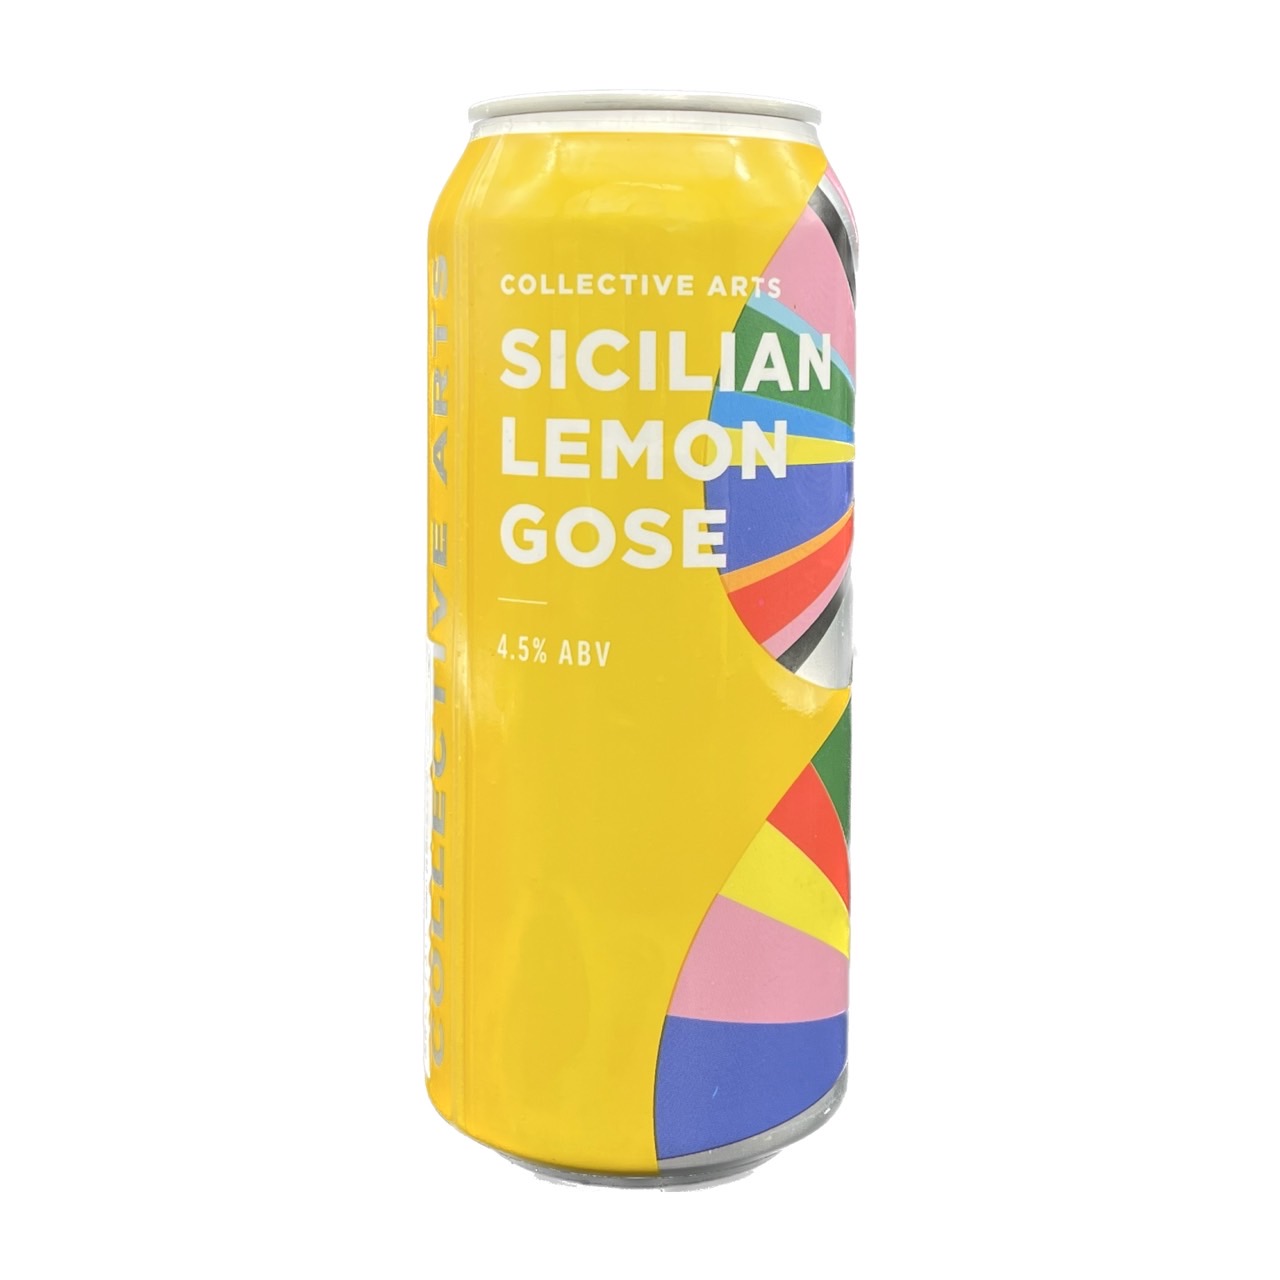 ☆Sicillian Lemon Gose/Collective Arts